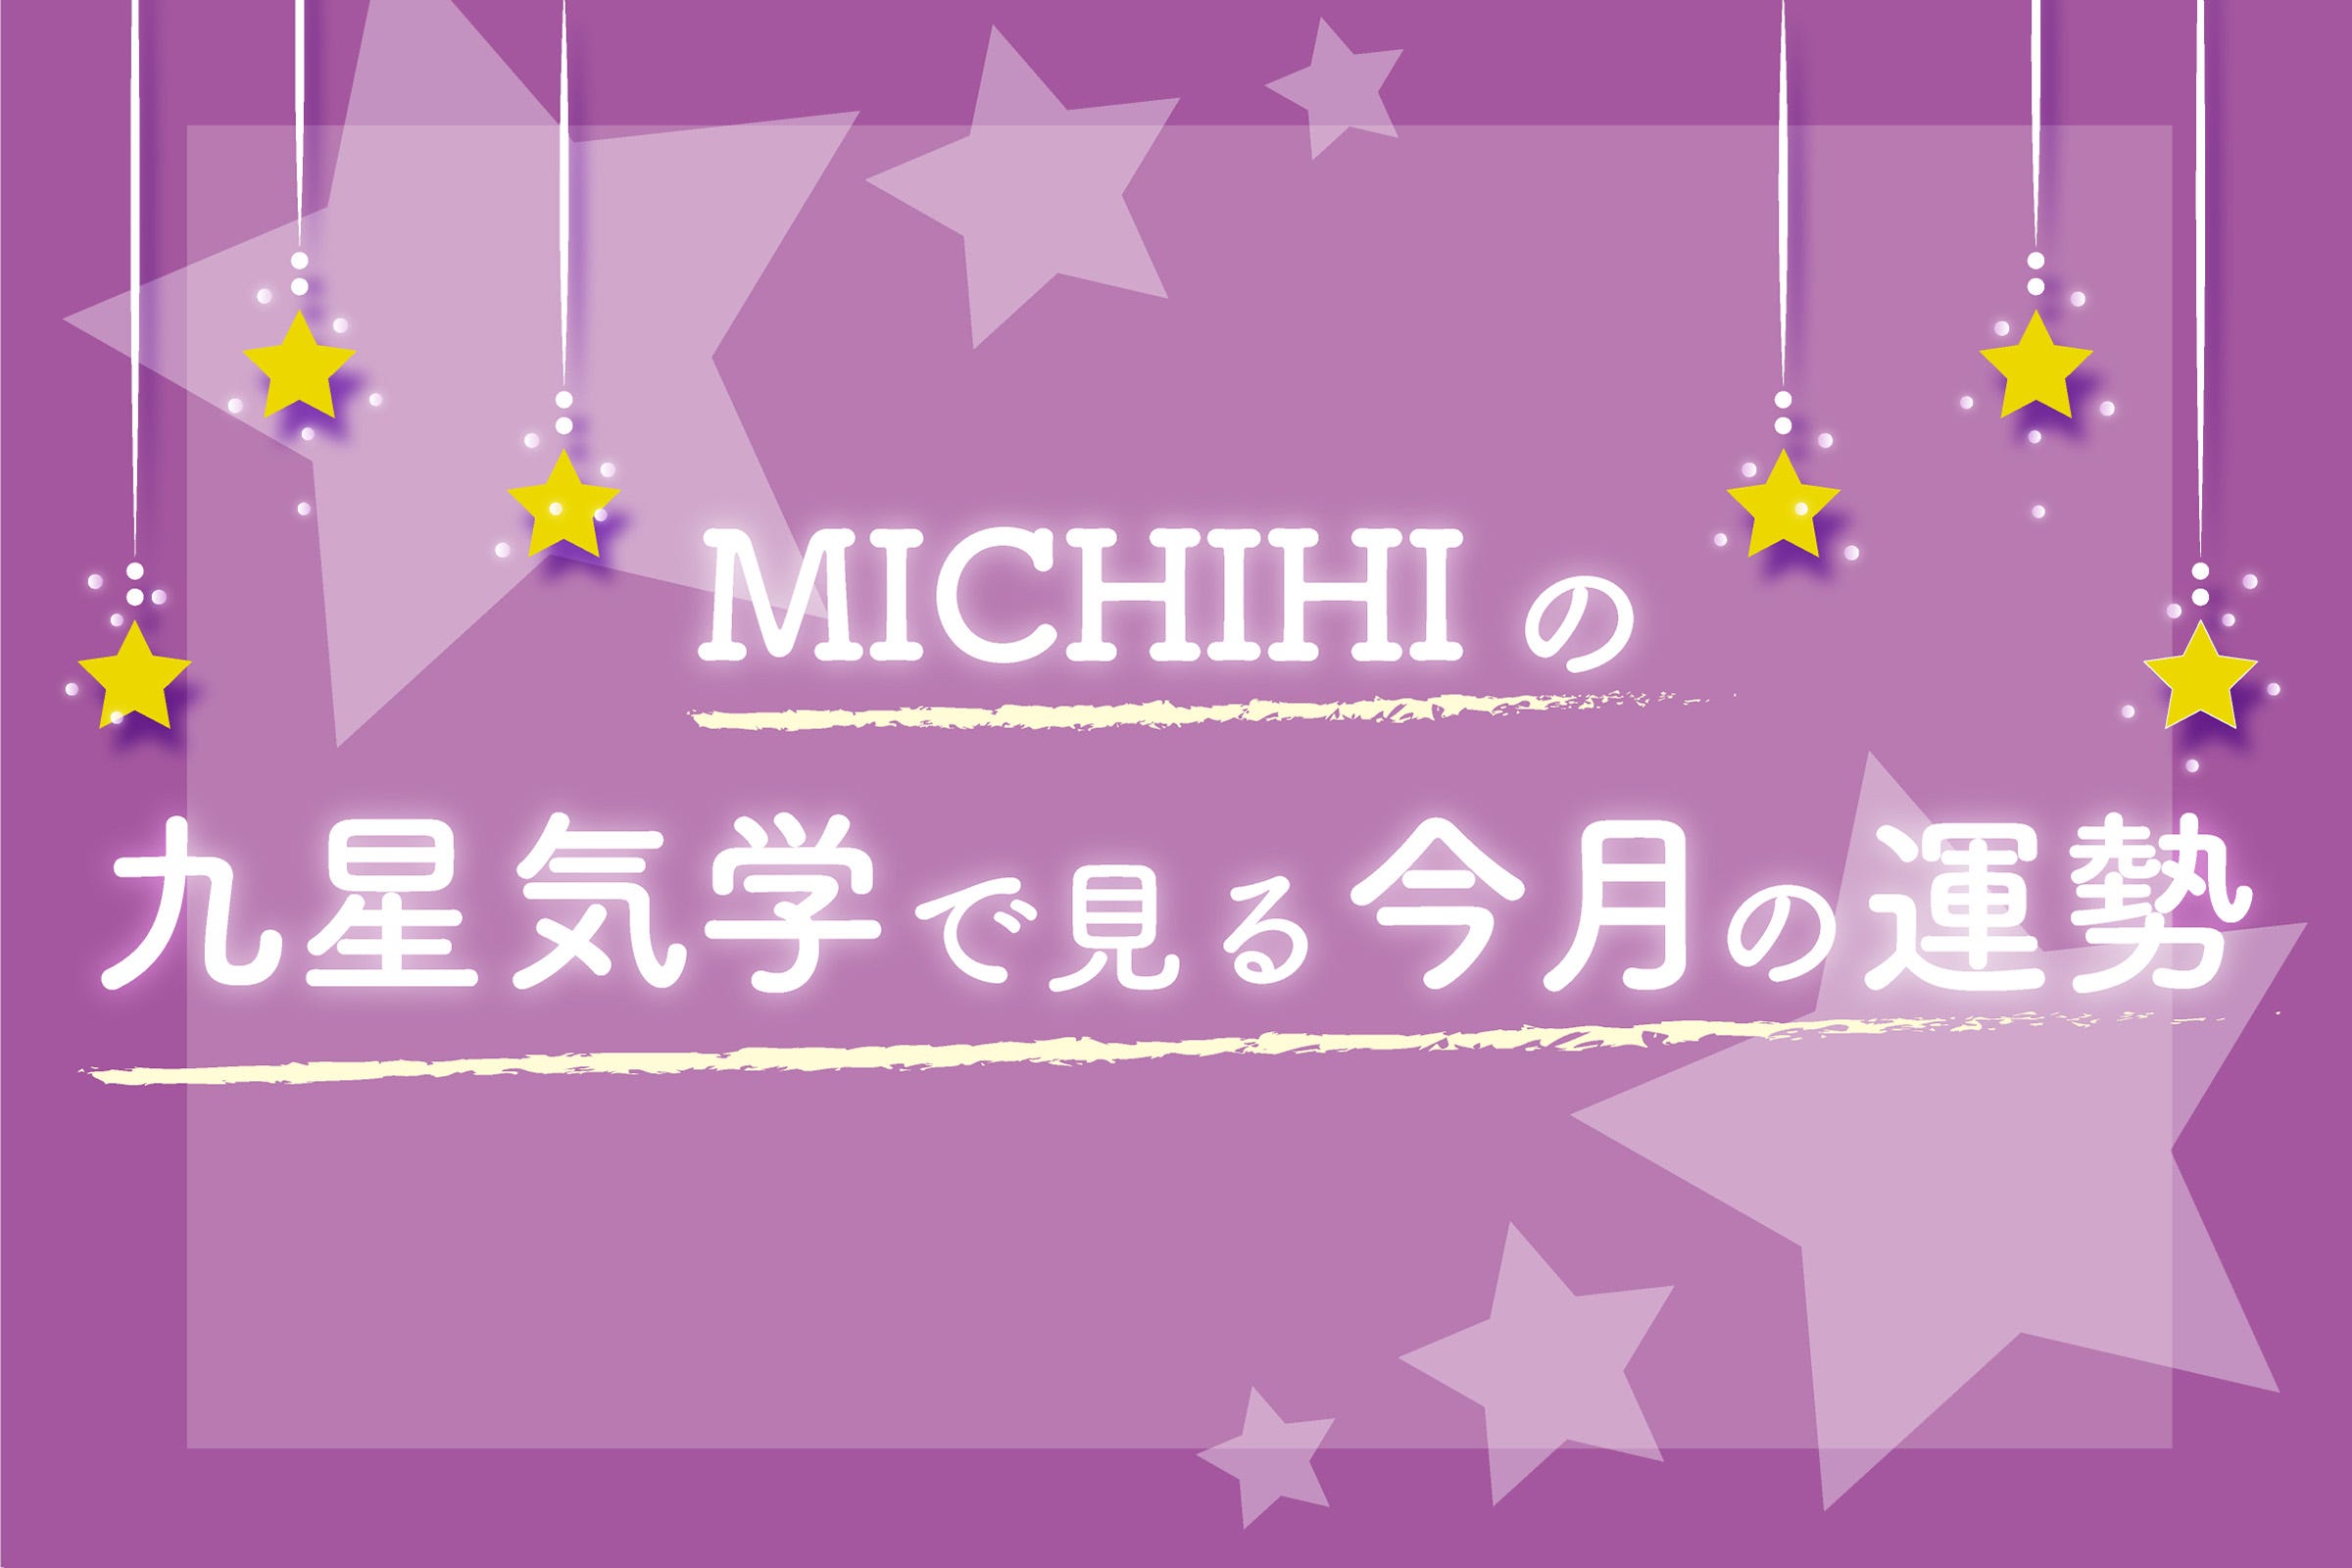 Michihiの 九星気学でみる今月の運勢 2月4日 3月4日 モデルプレス